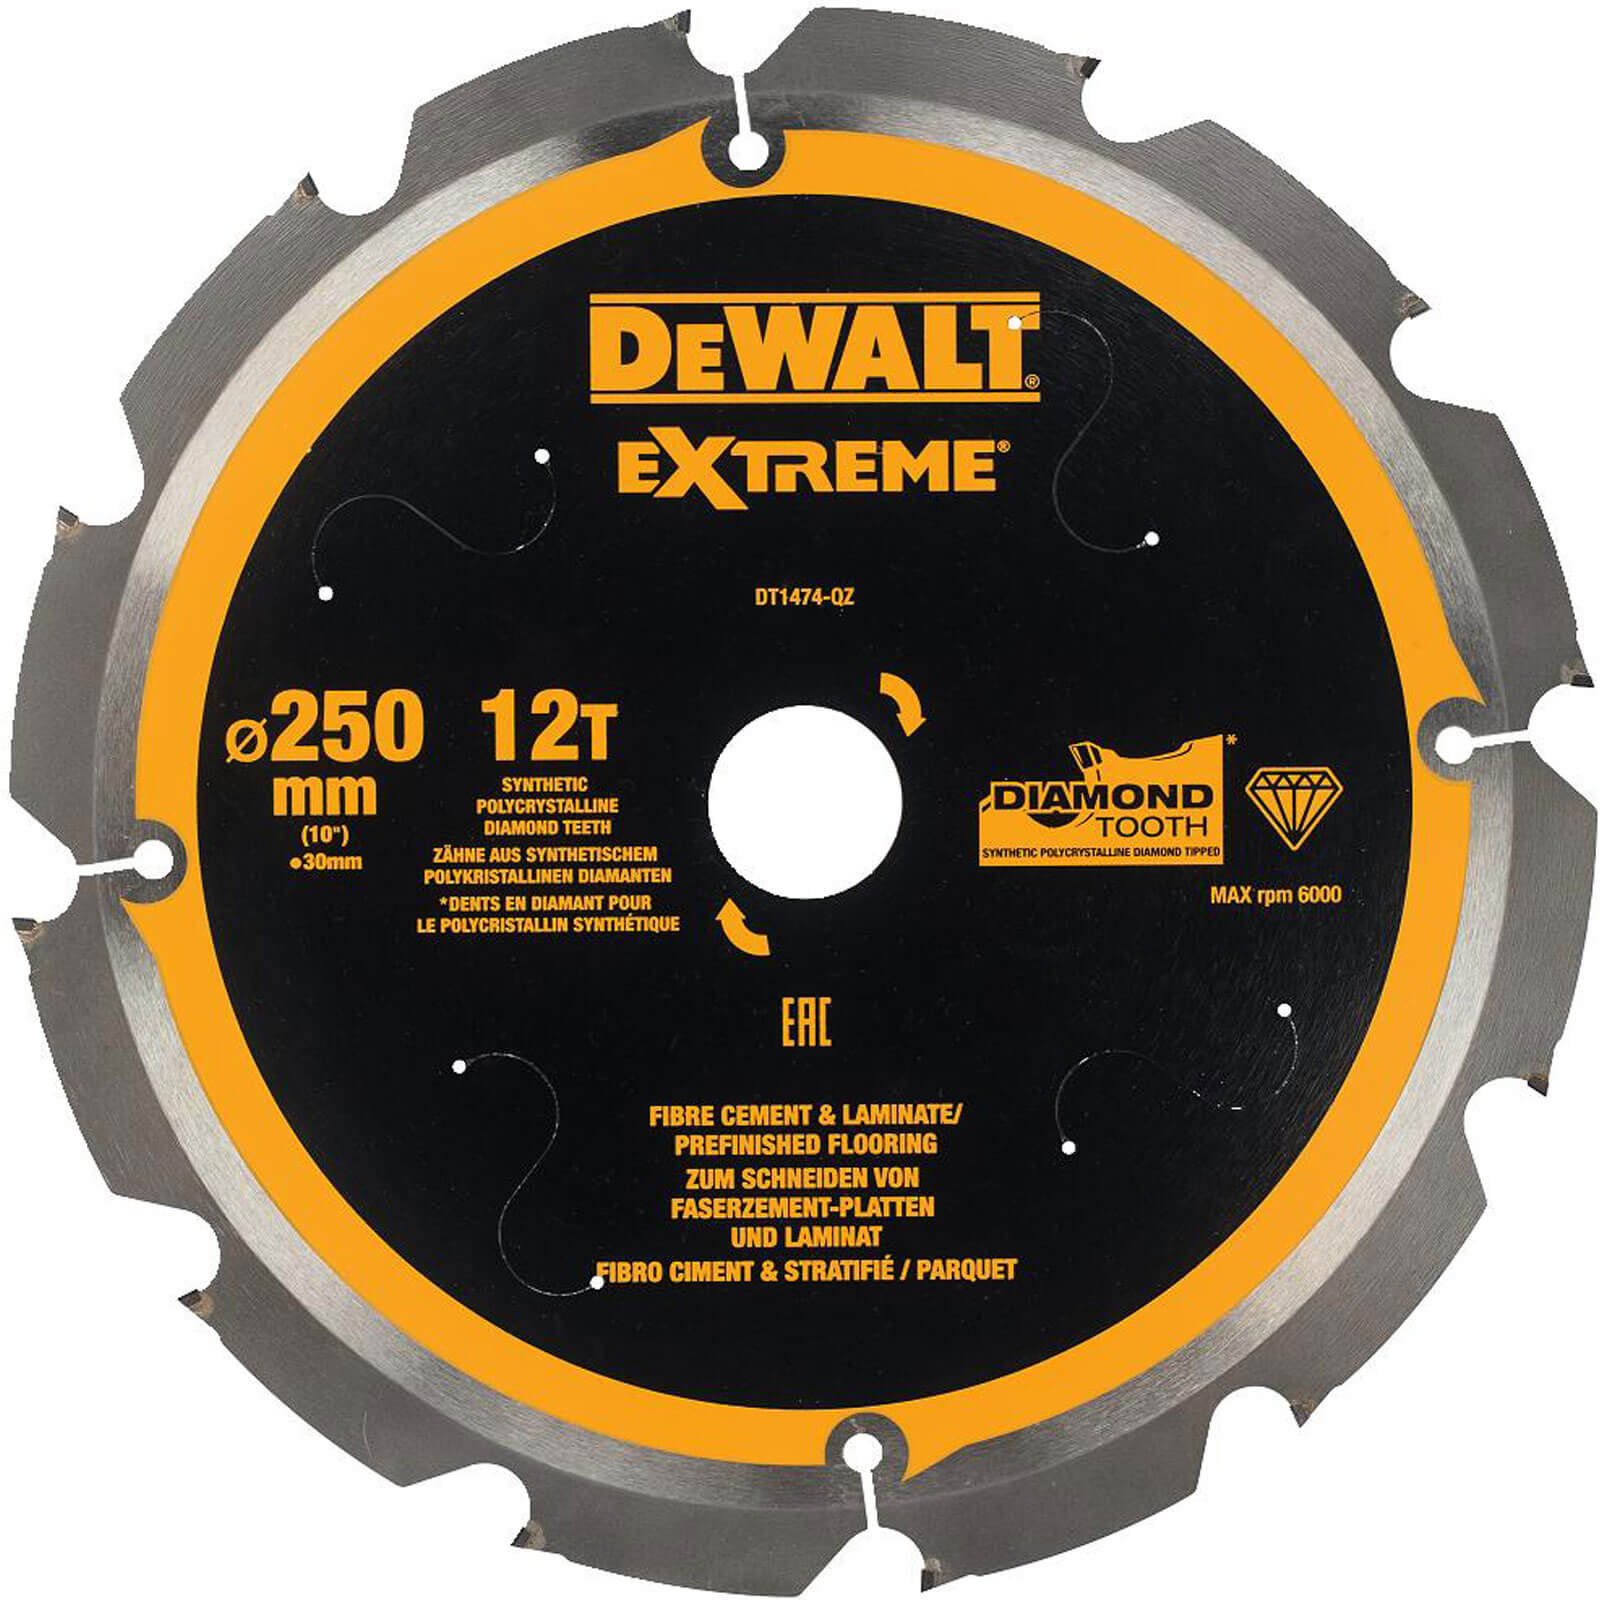 DeWalt PCD Fibre Cement Saw Blade 250mm 12T 30mm